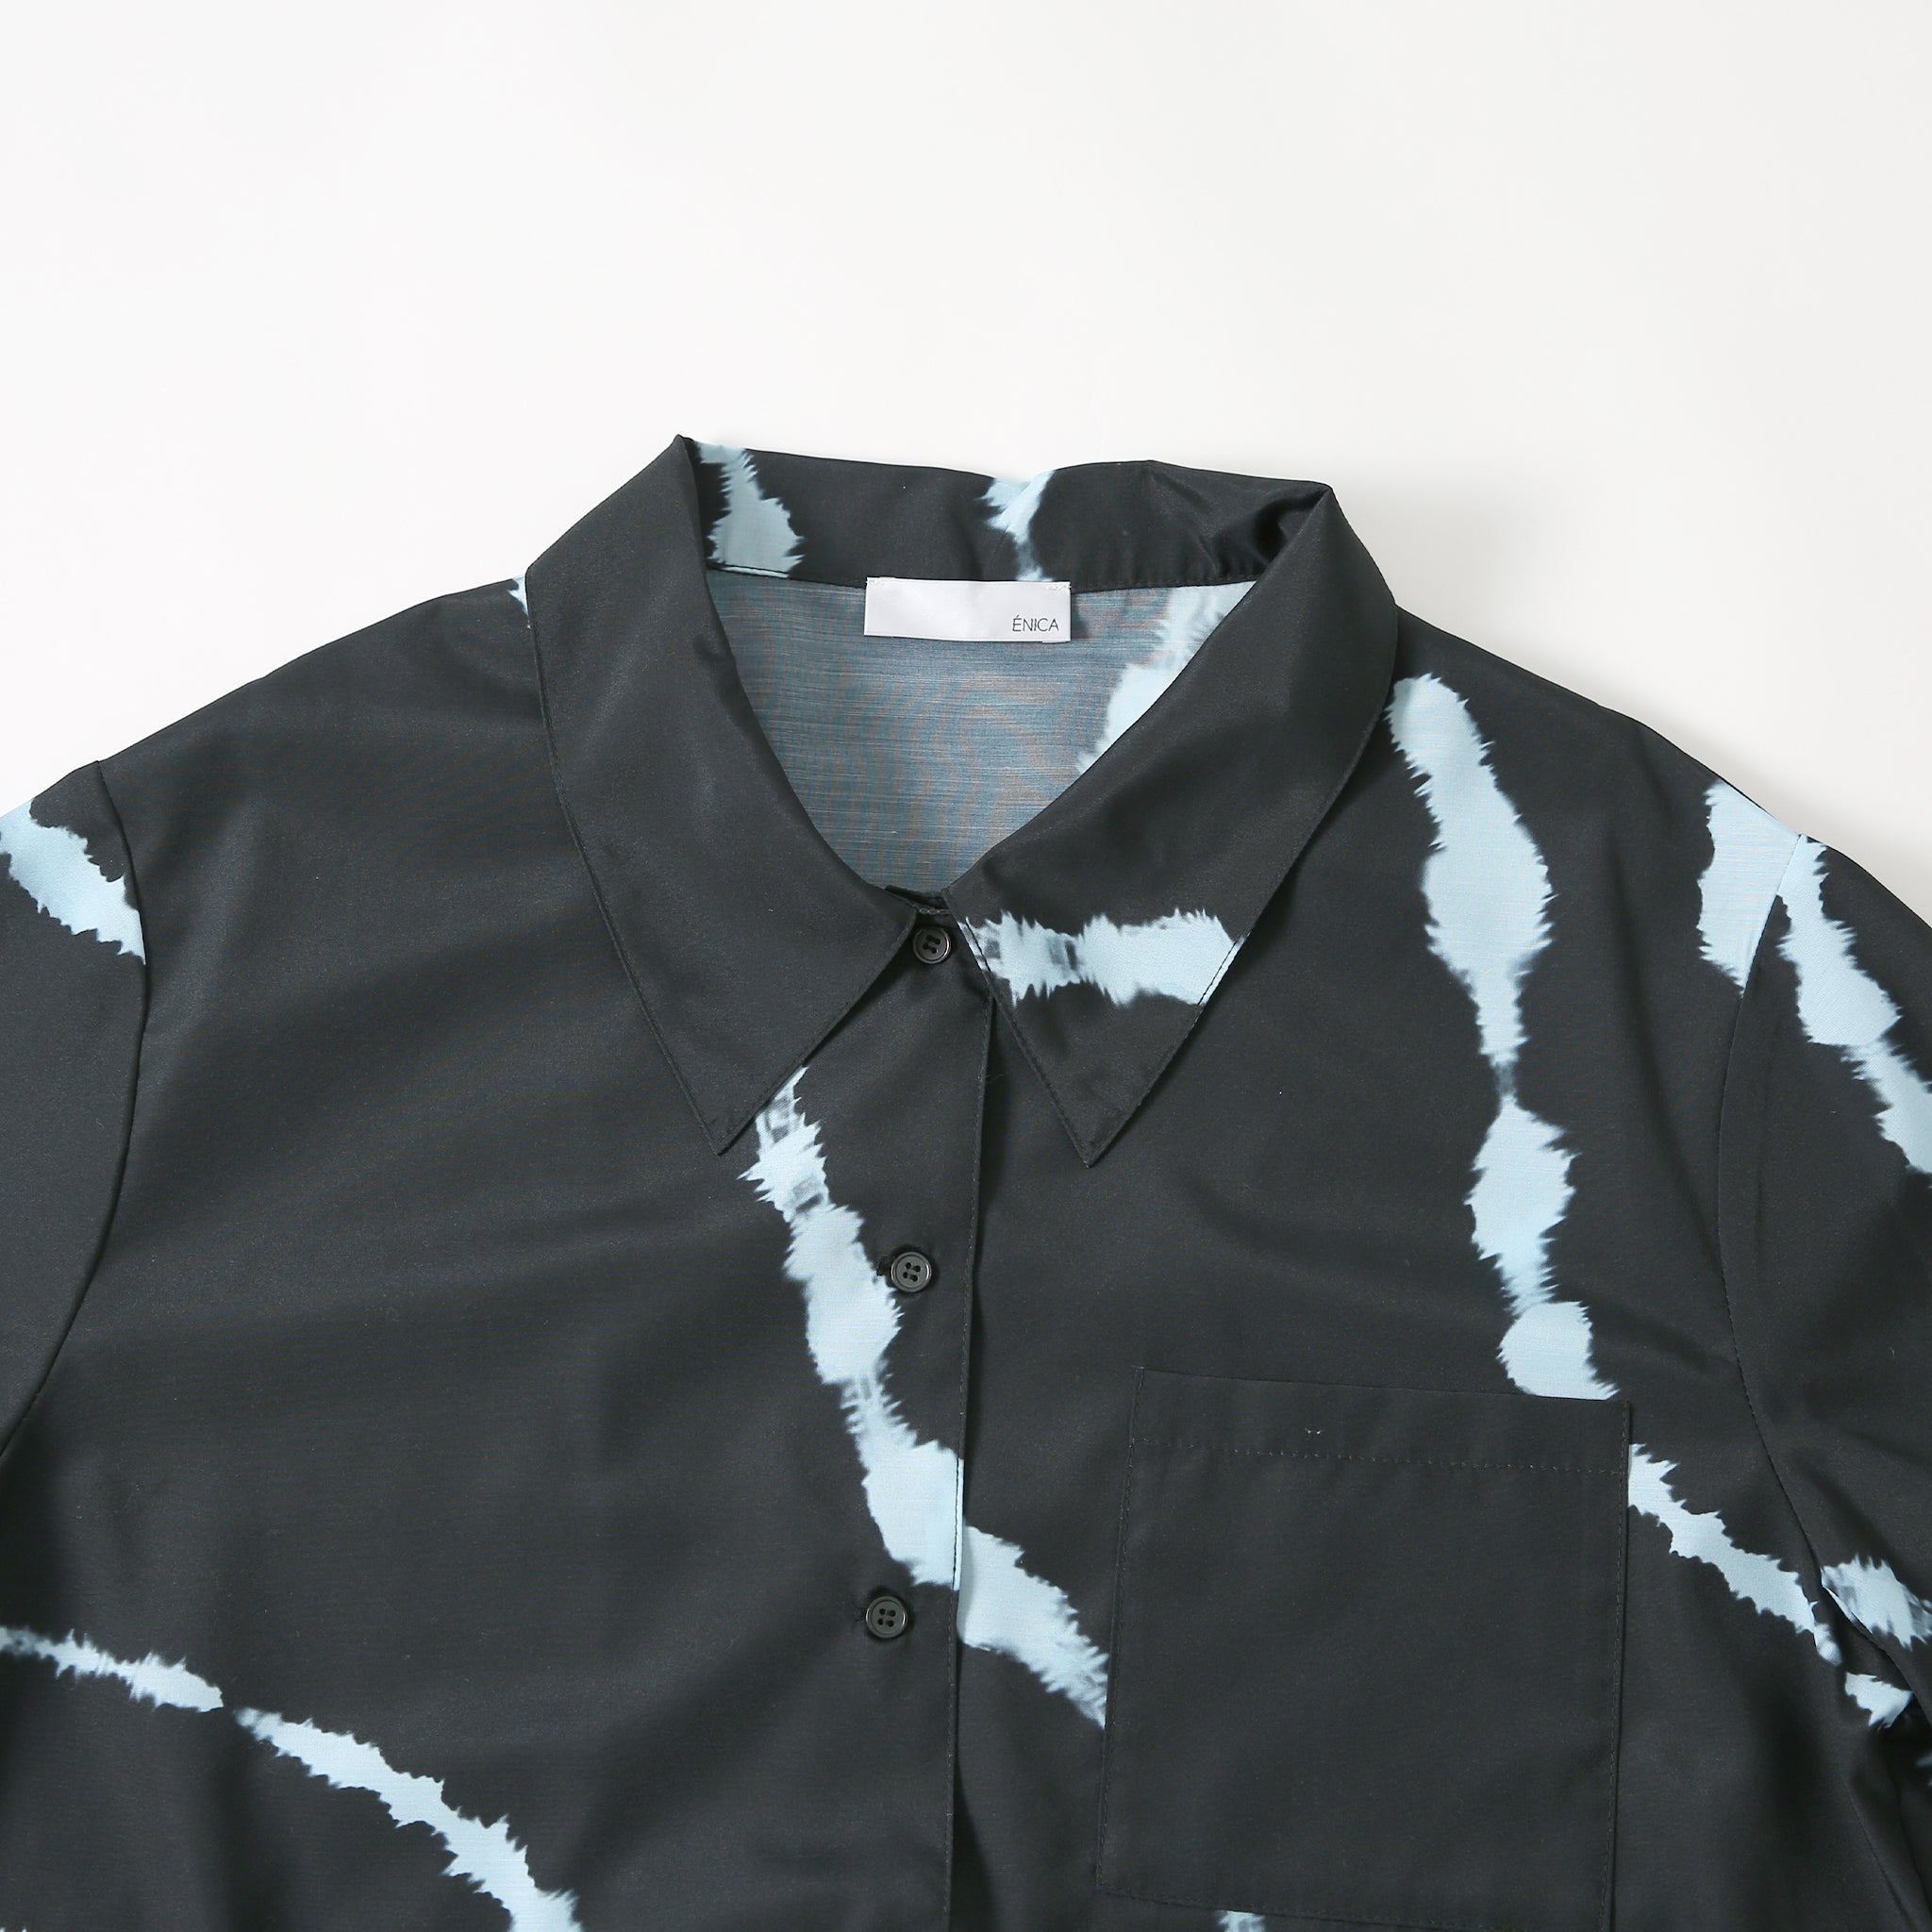 ENICA（エニカ）Original Tie-dye Shirt（オリジナルタイダイシャツ 